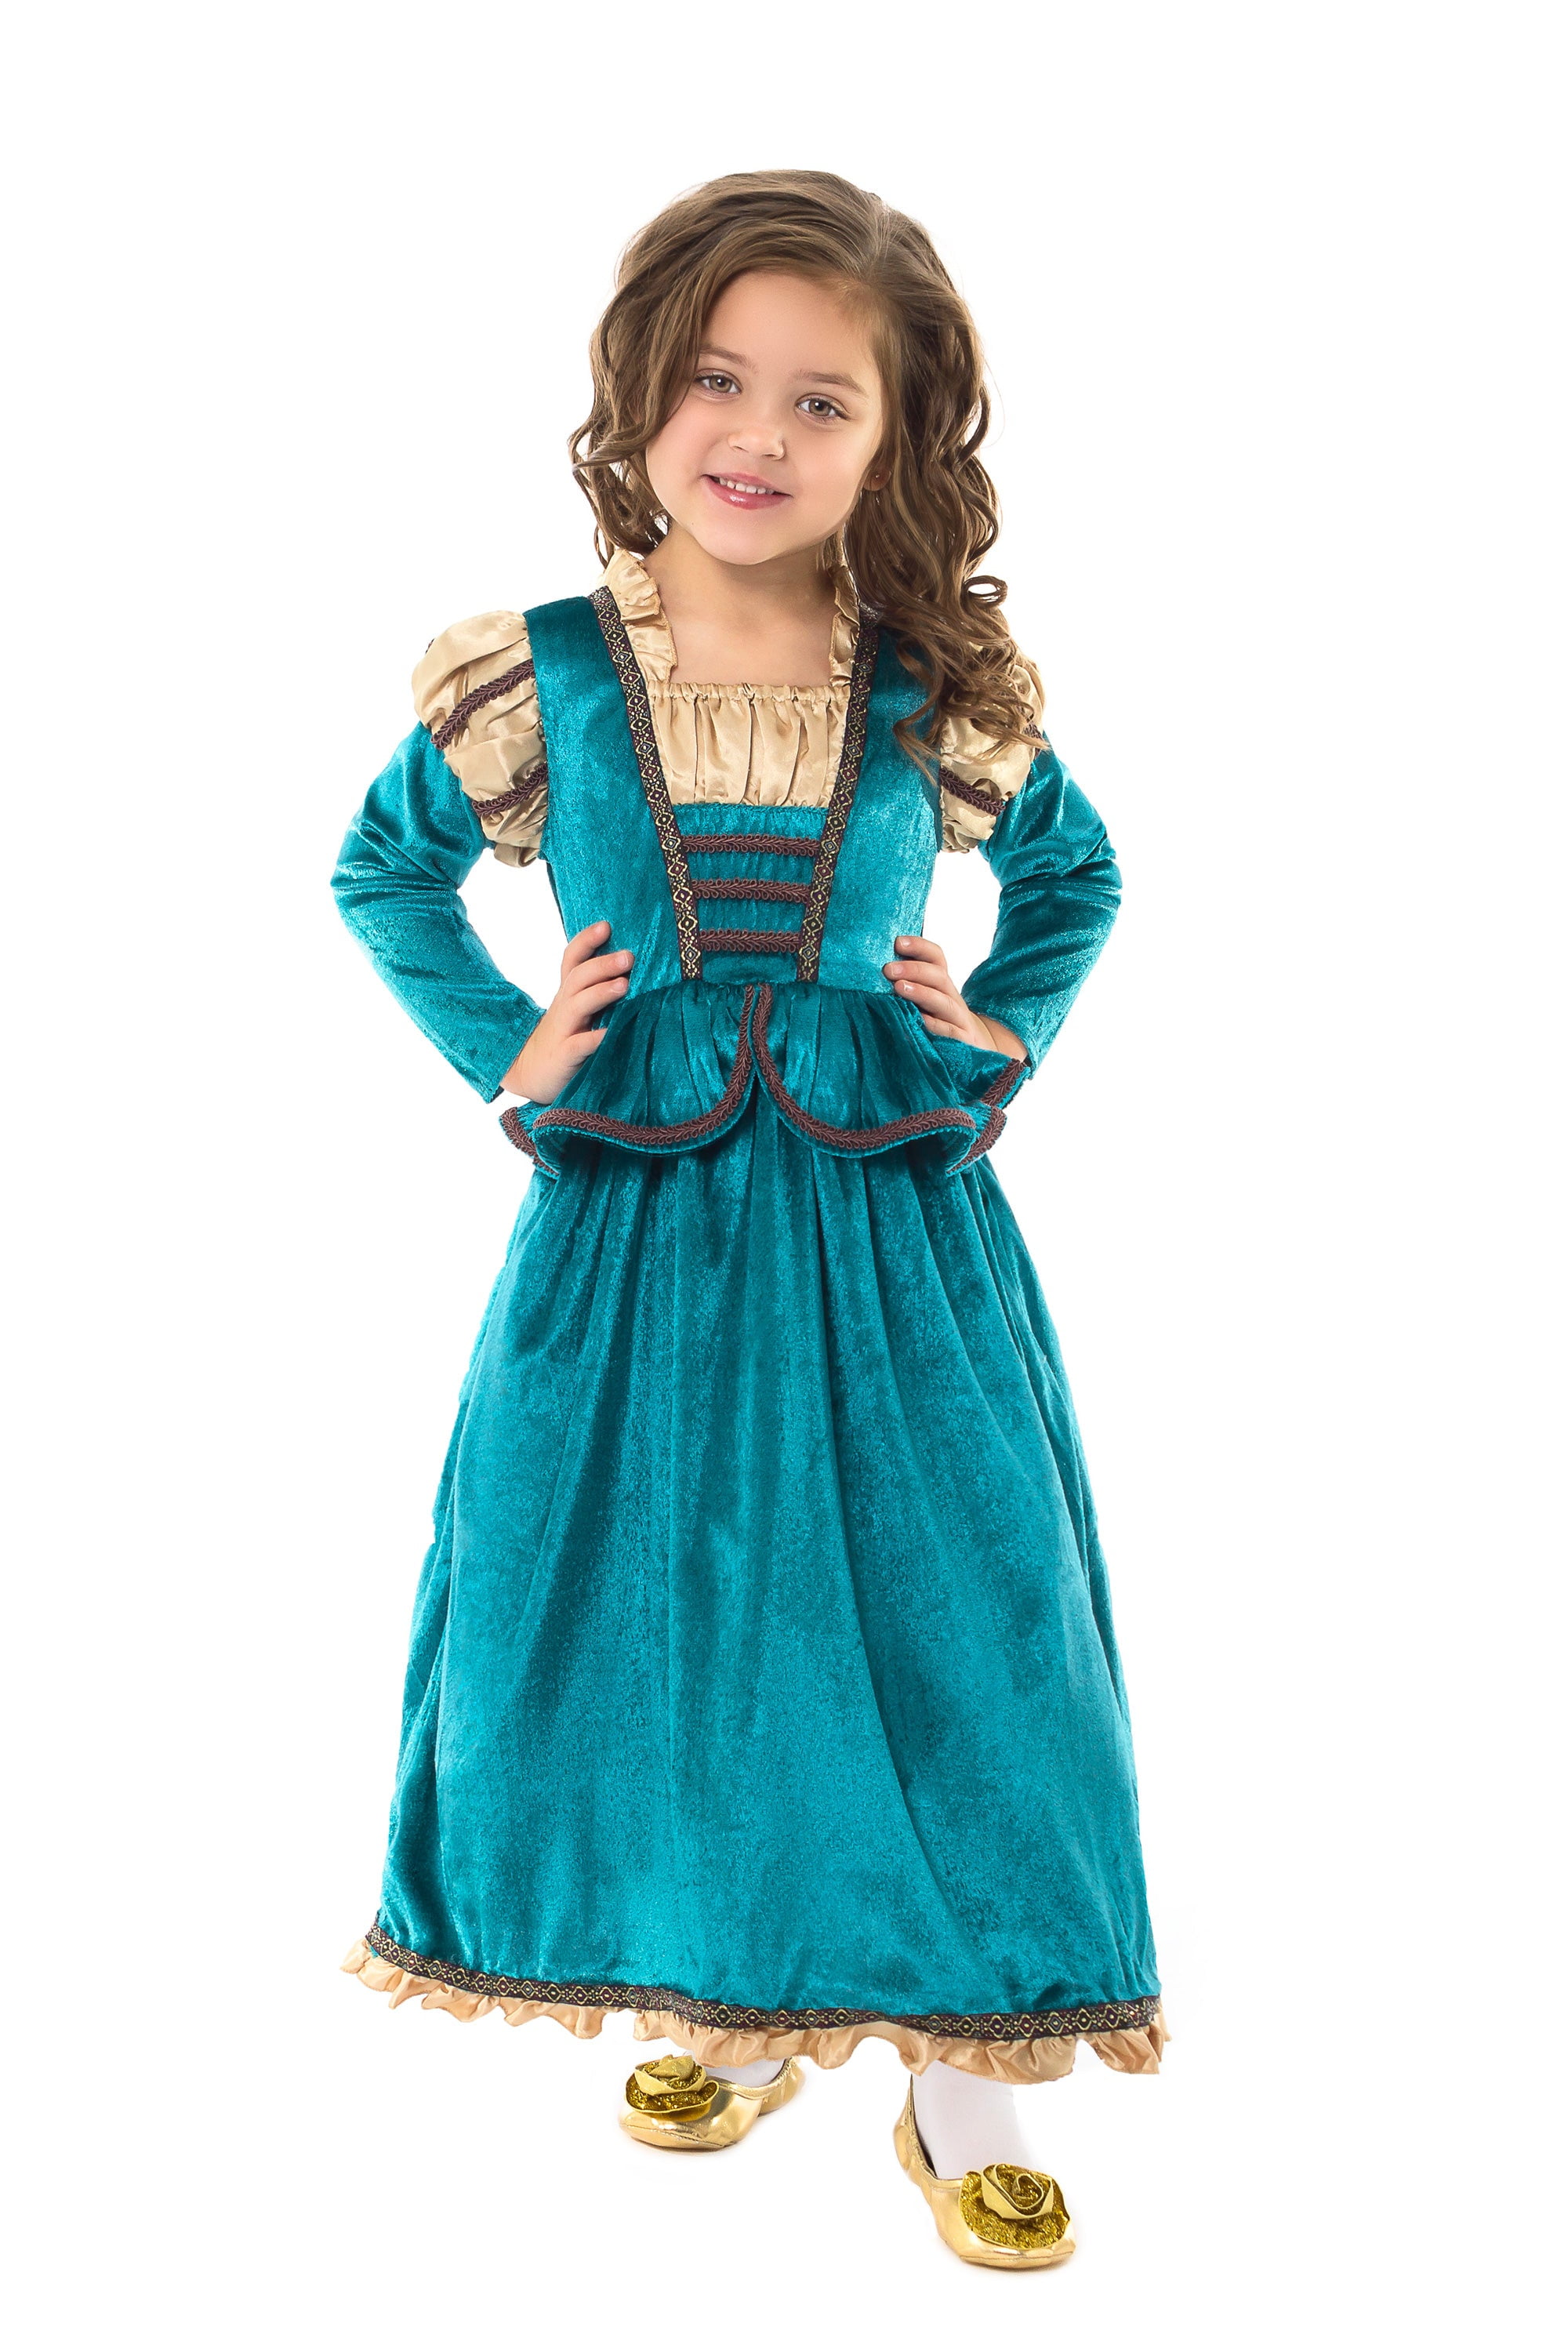 Medieval Princess Dress Up - Walmart.com